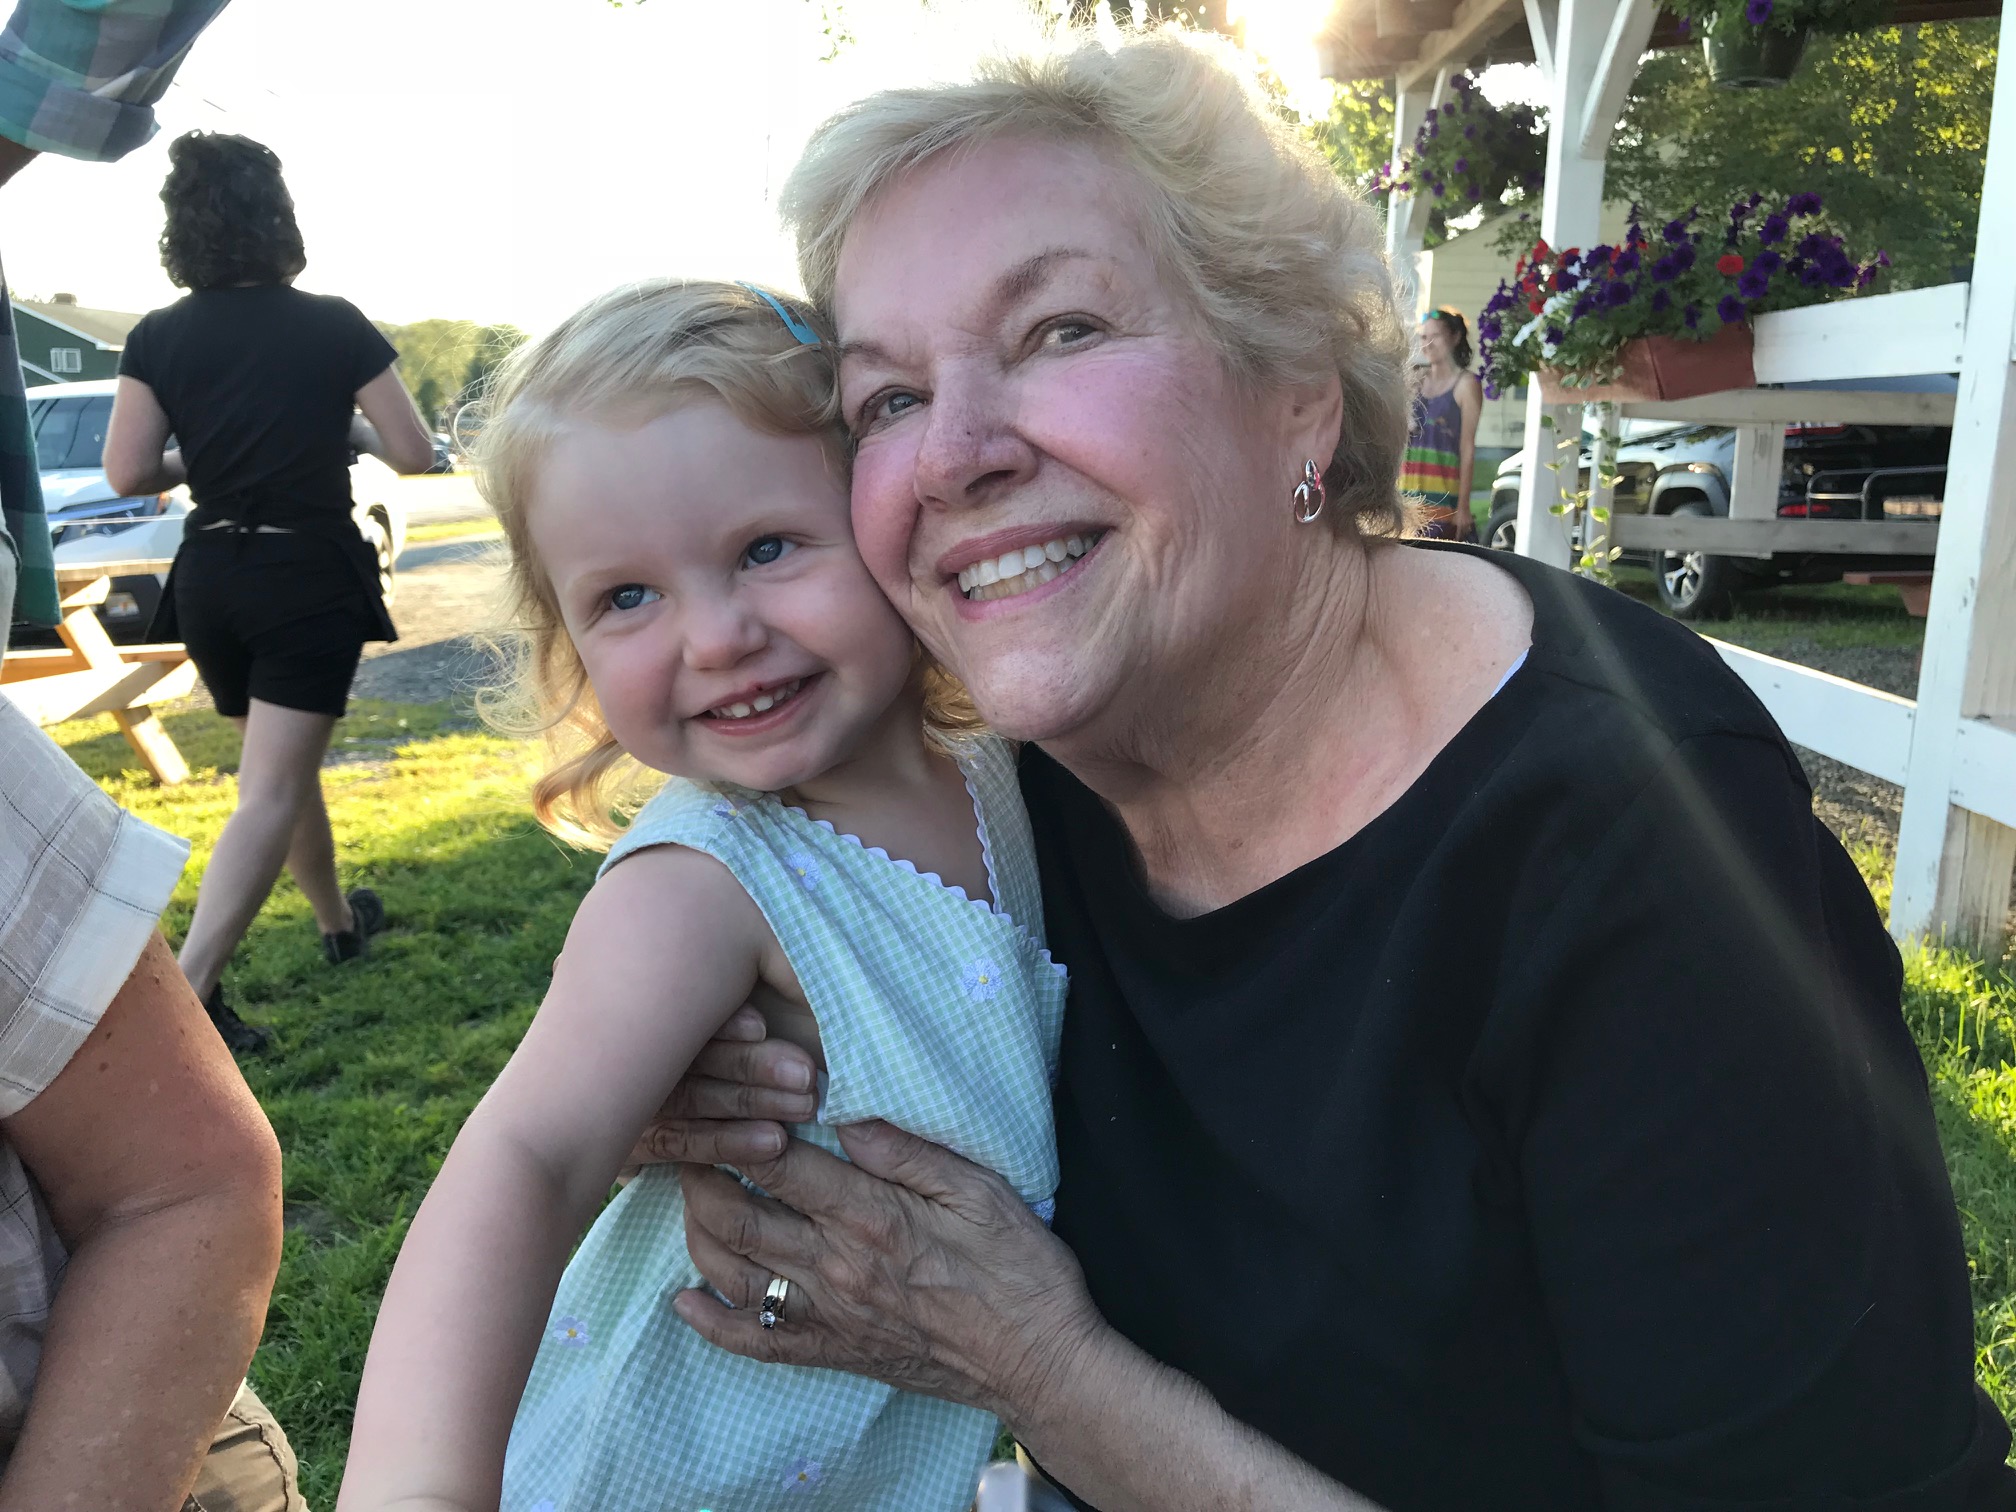 Liza hugging grandchild outdoors